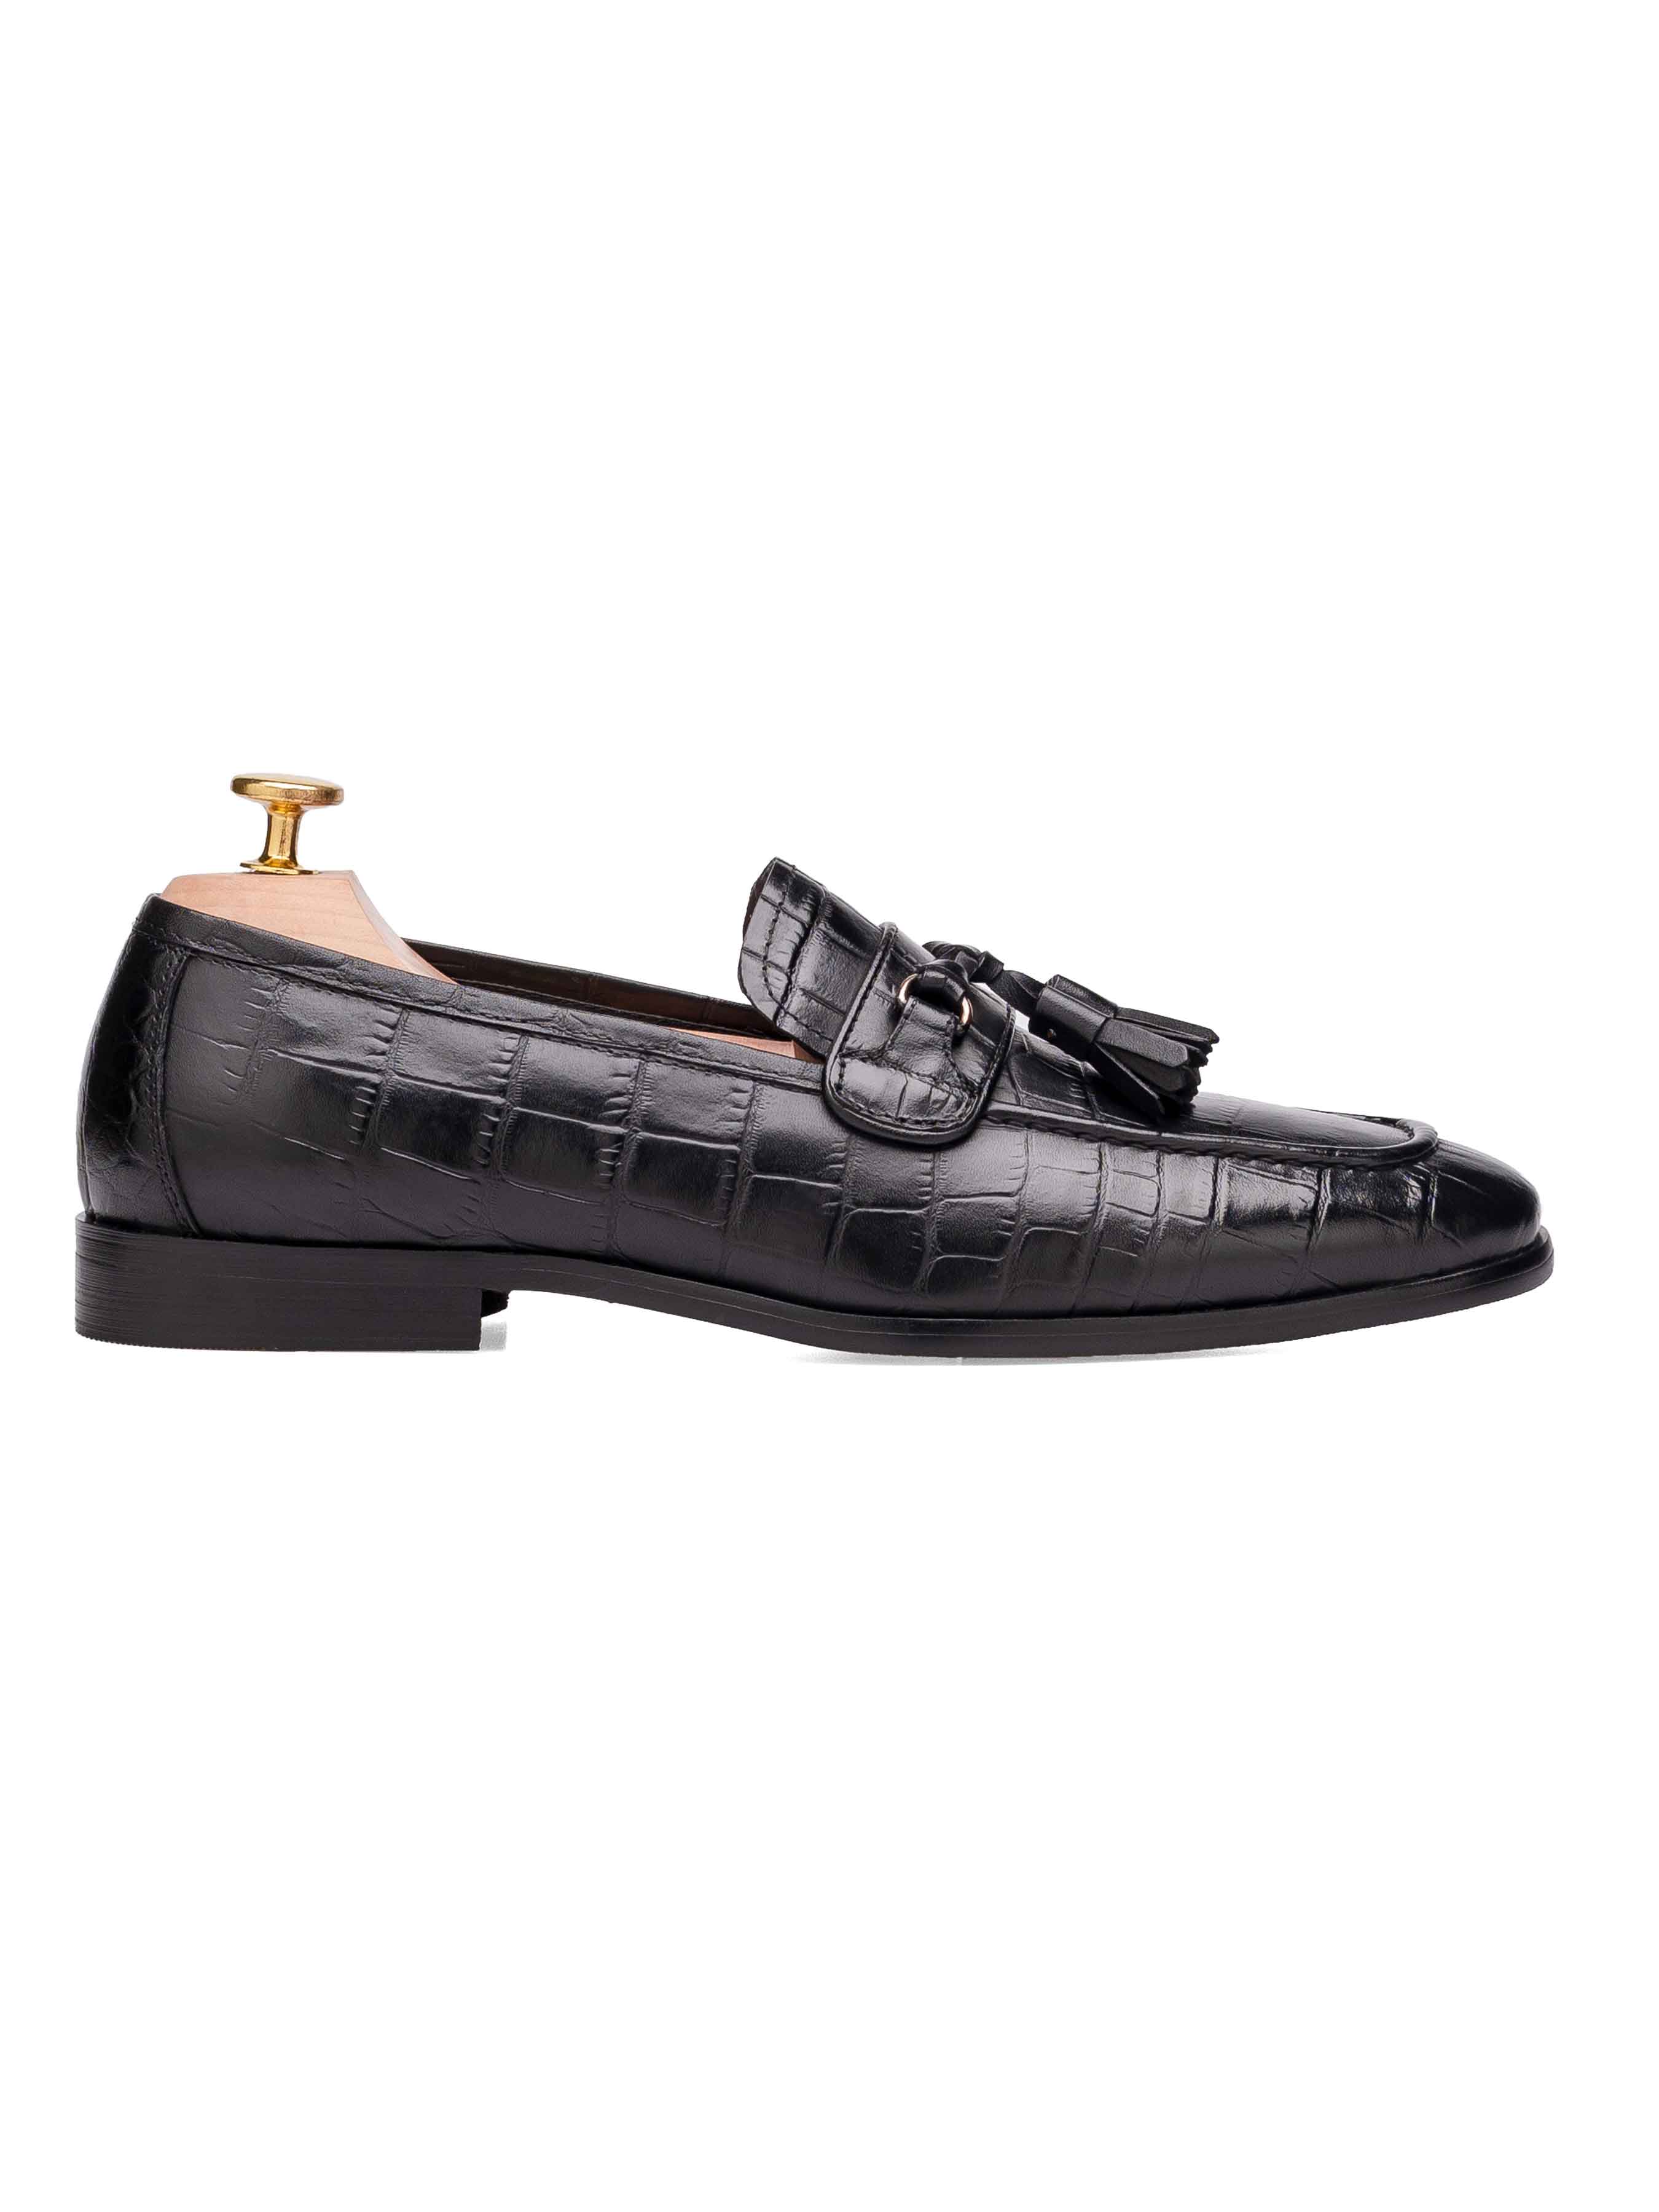 Elvio Tassel Loafer - Black Croco Polished Leather